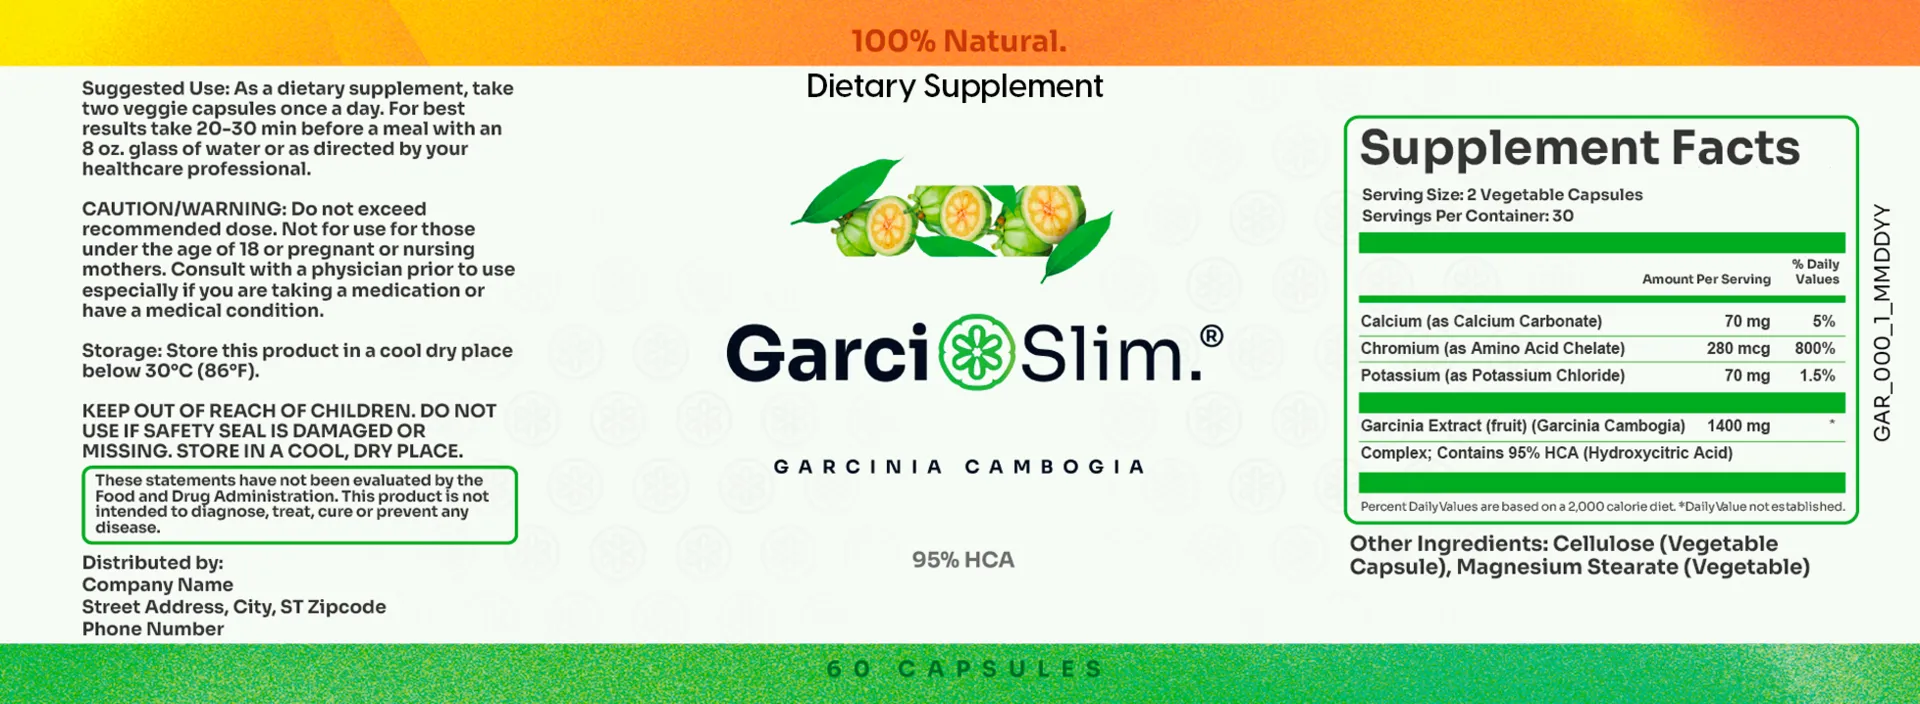 GarciSlim Product Label